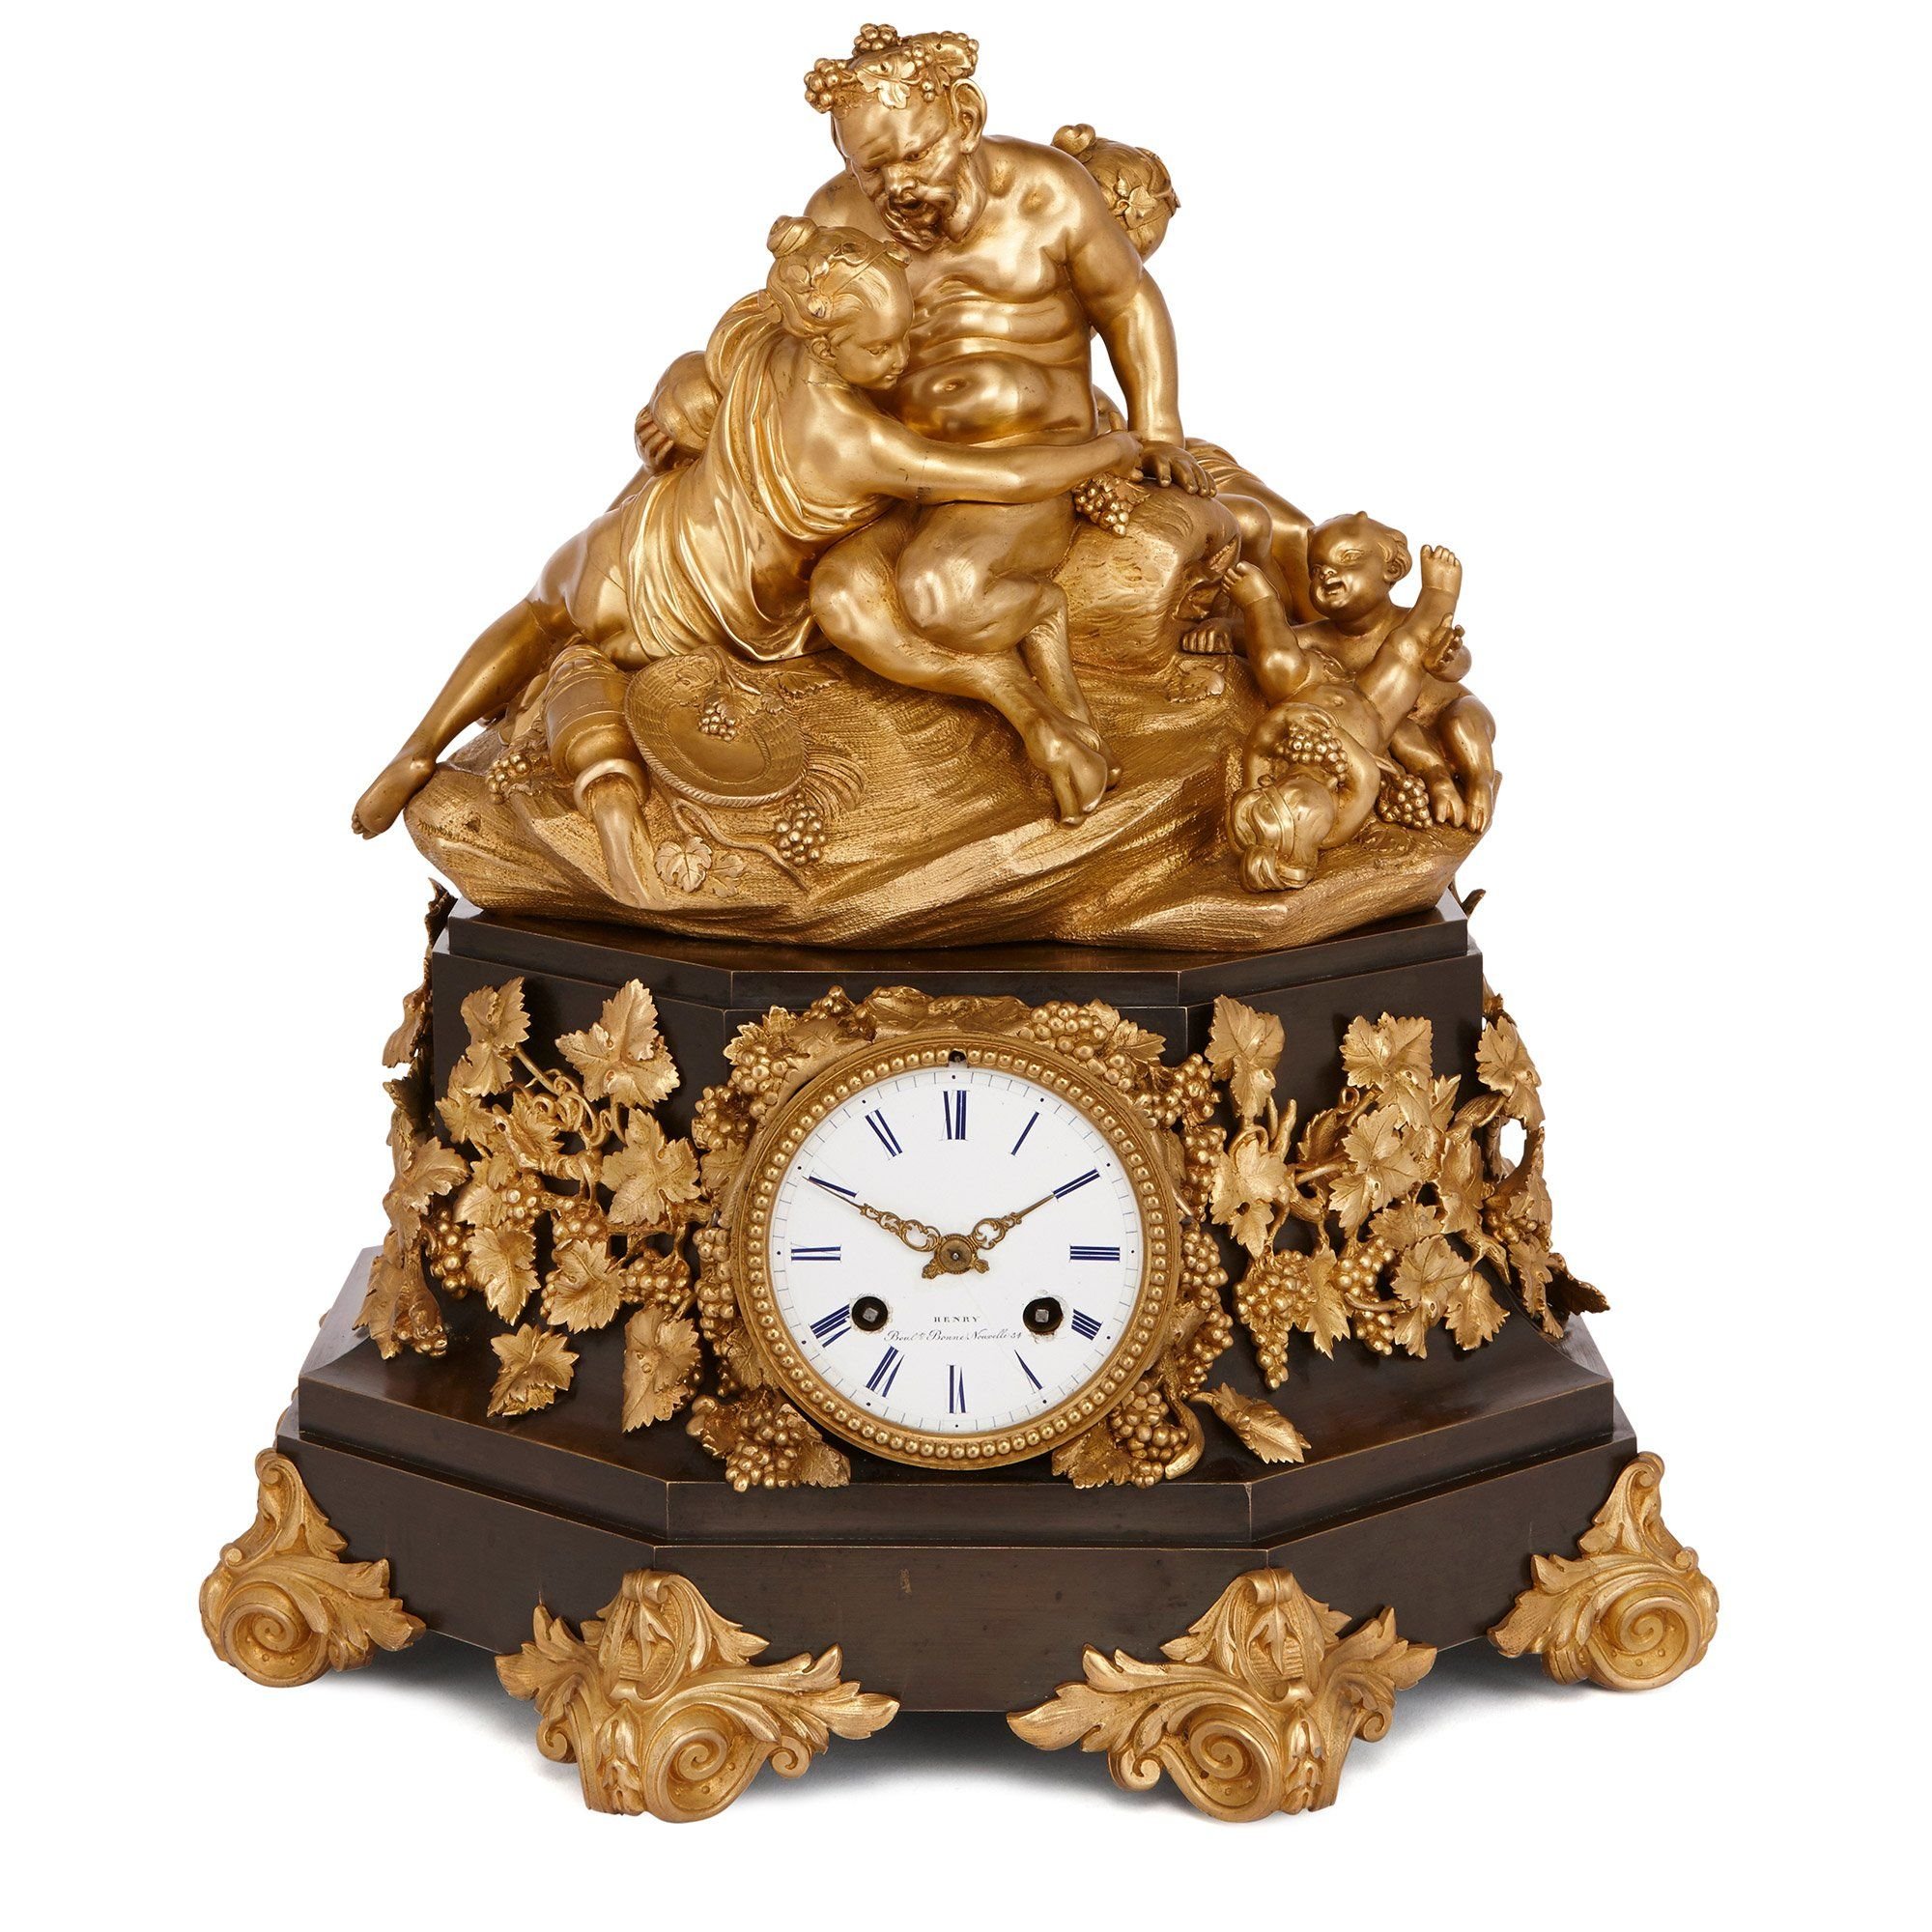 French hours. Mantel Clock 19 Century. Antique Mantel Clock. Mercury gilt Bronze Mantel Clock. Часы настольные 19 век.